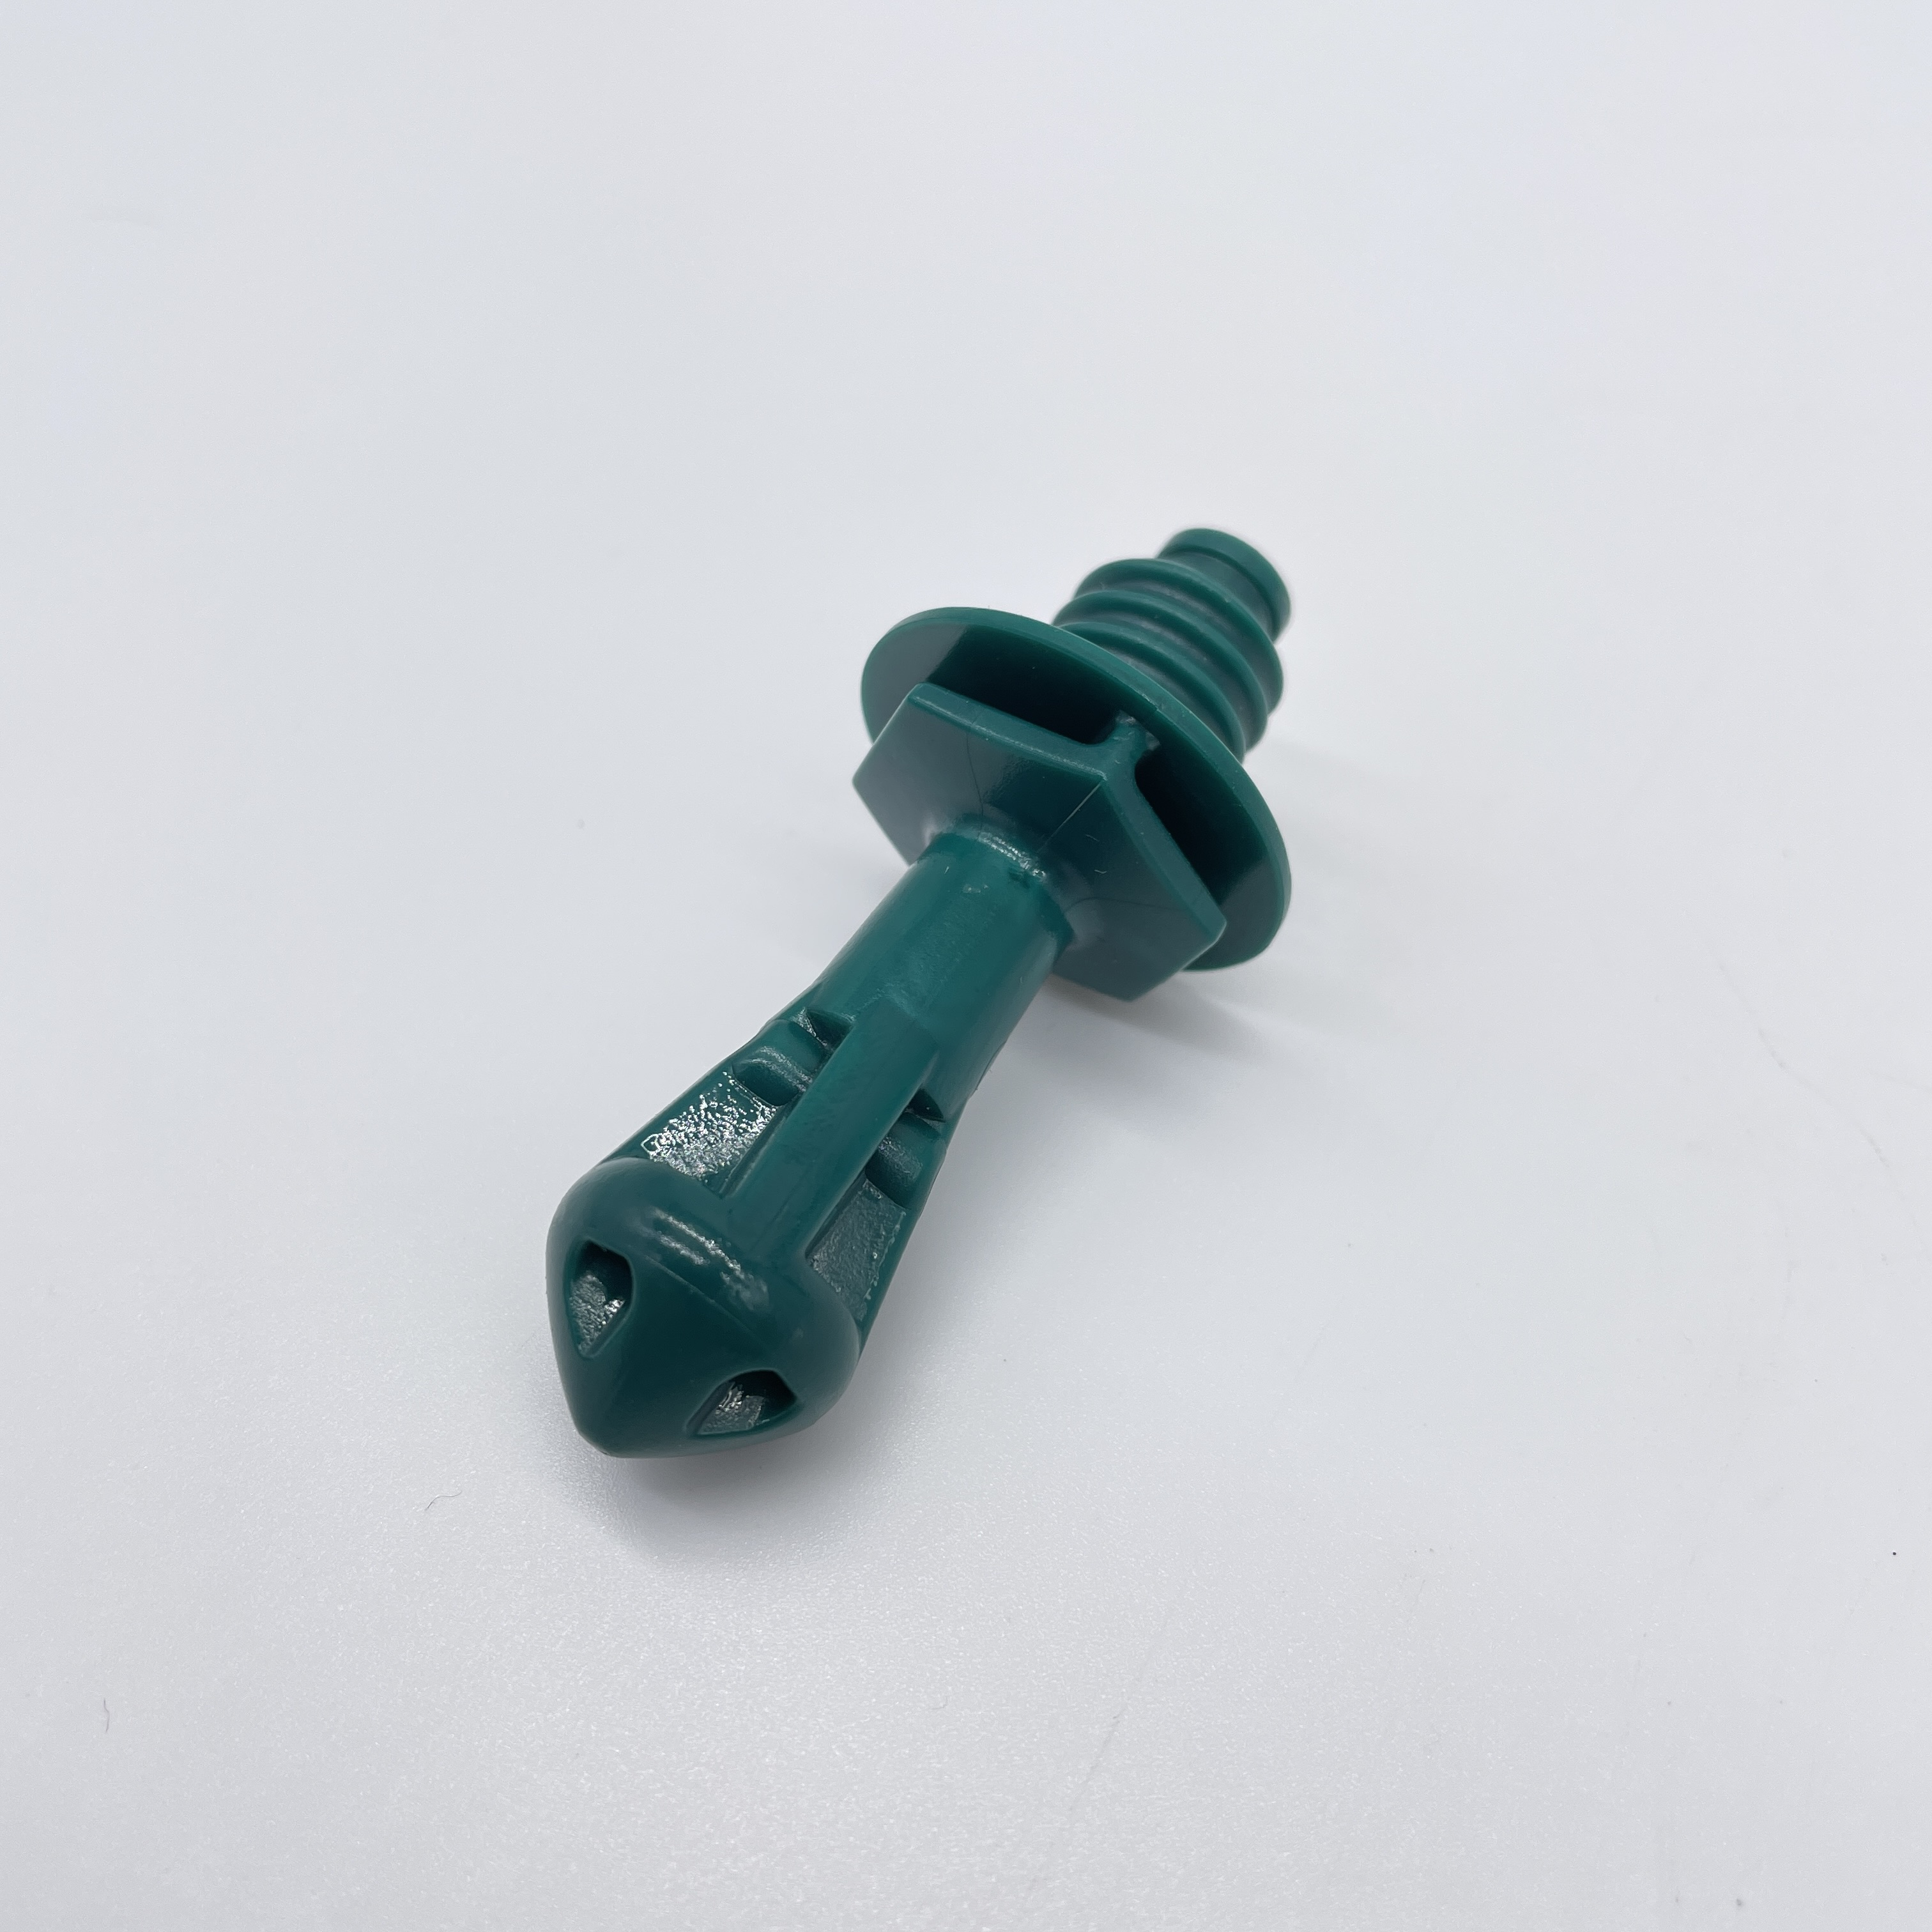 Spülkopf grün für Spülaufnahme CCR ; l=45 mm GEA